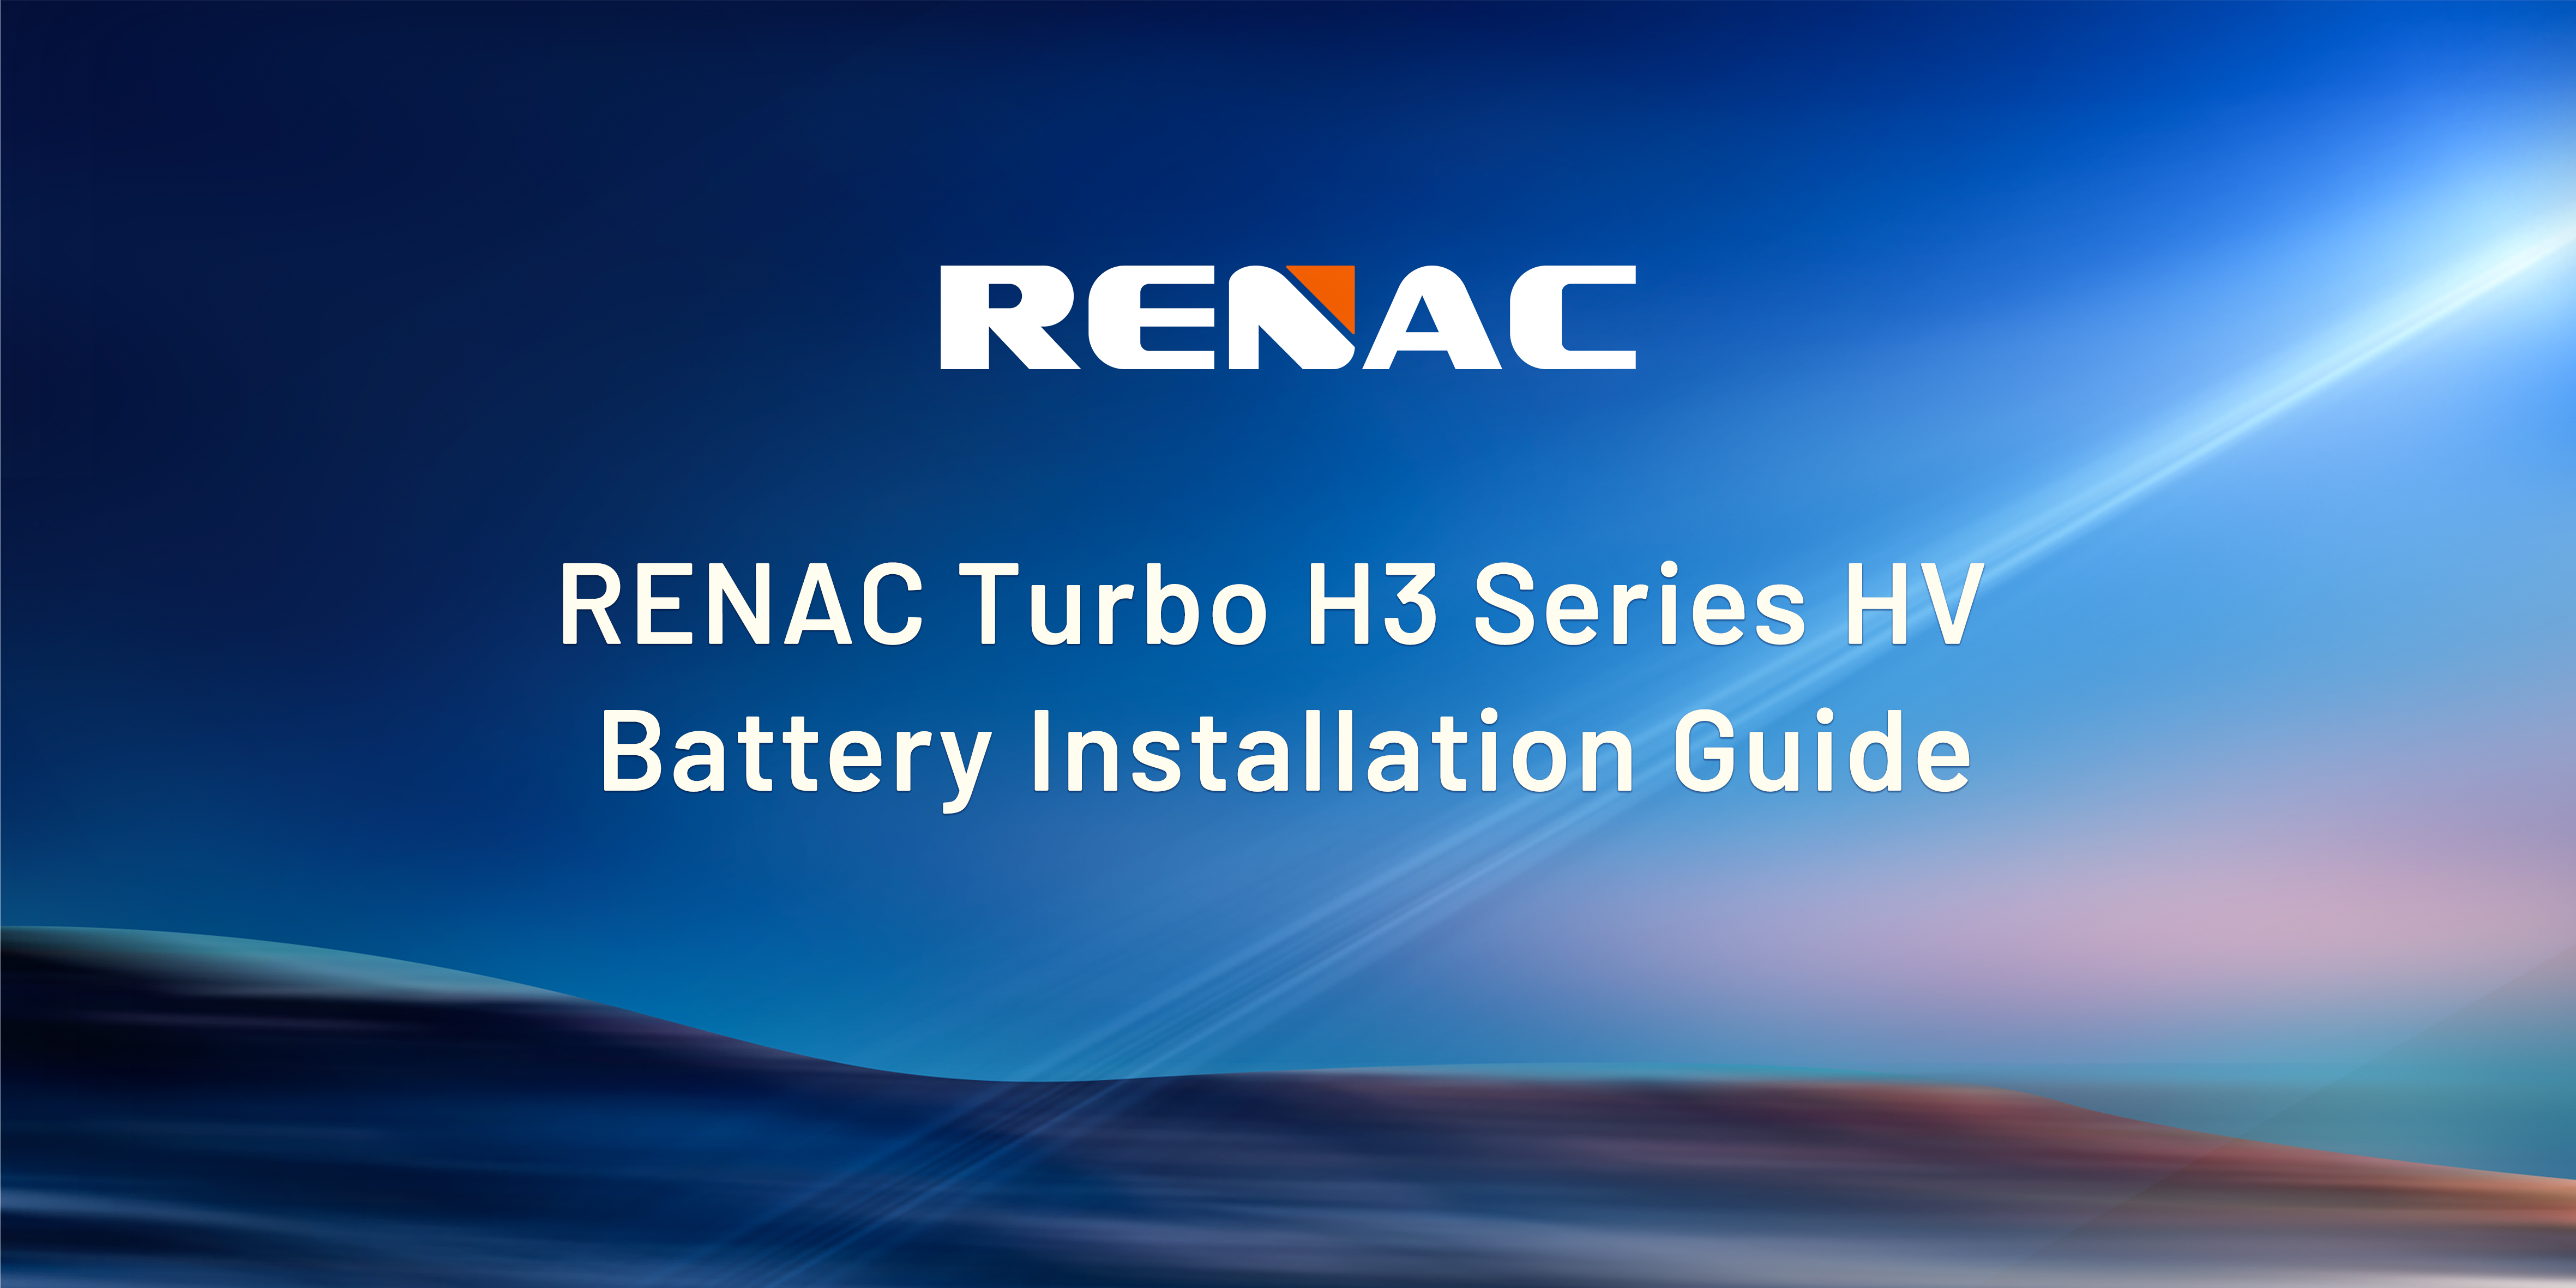 RENAC Turbo H3 Series HV Battery Installation Guide